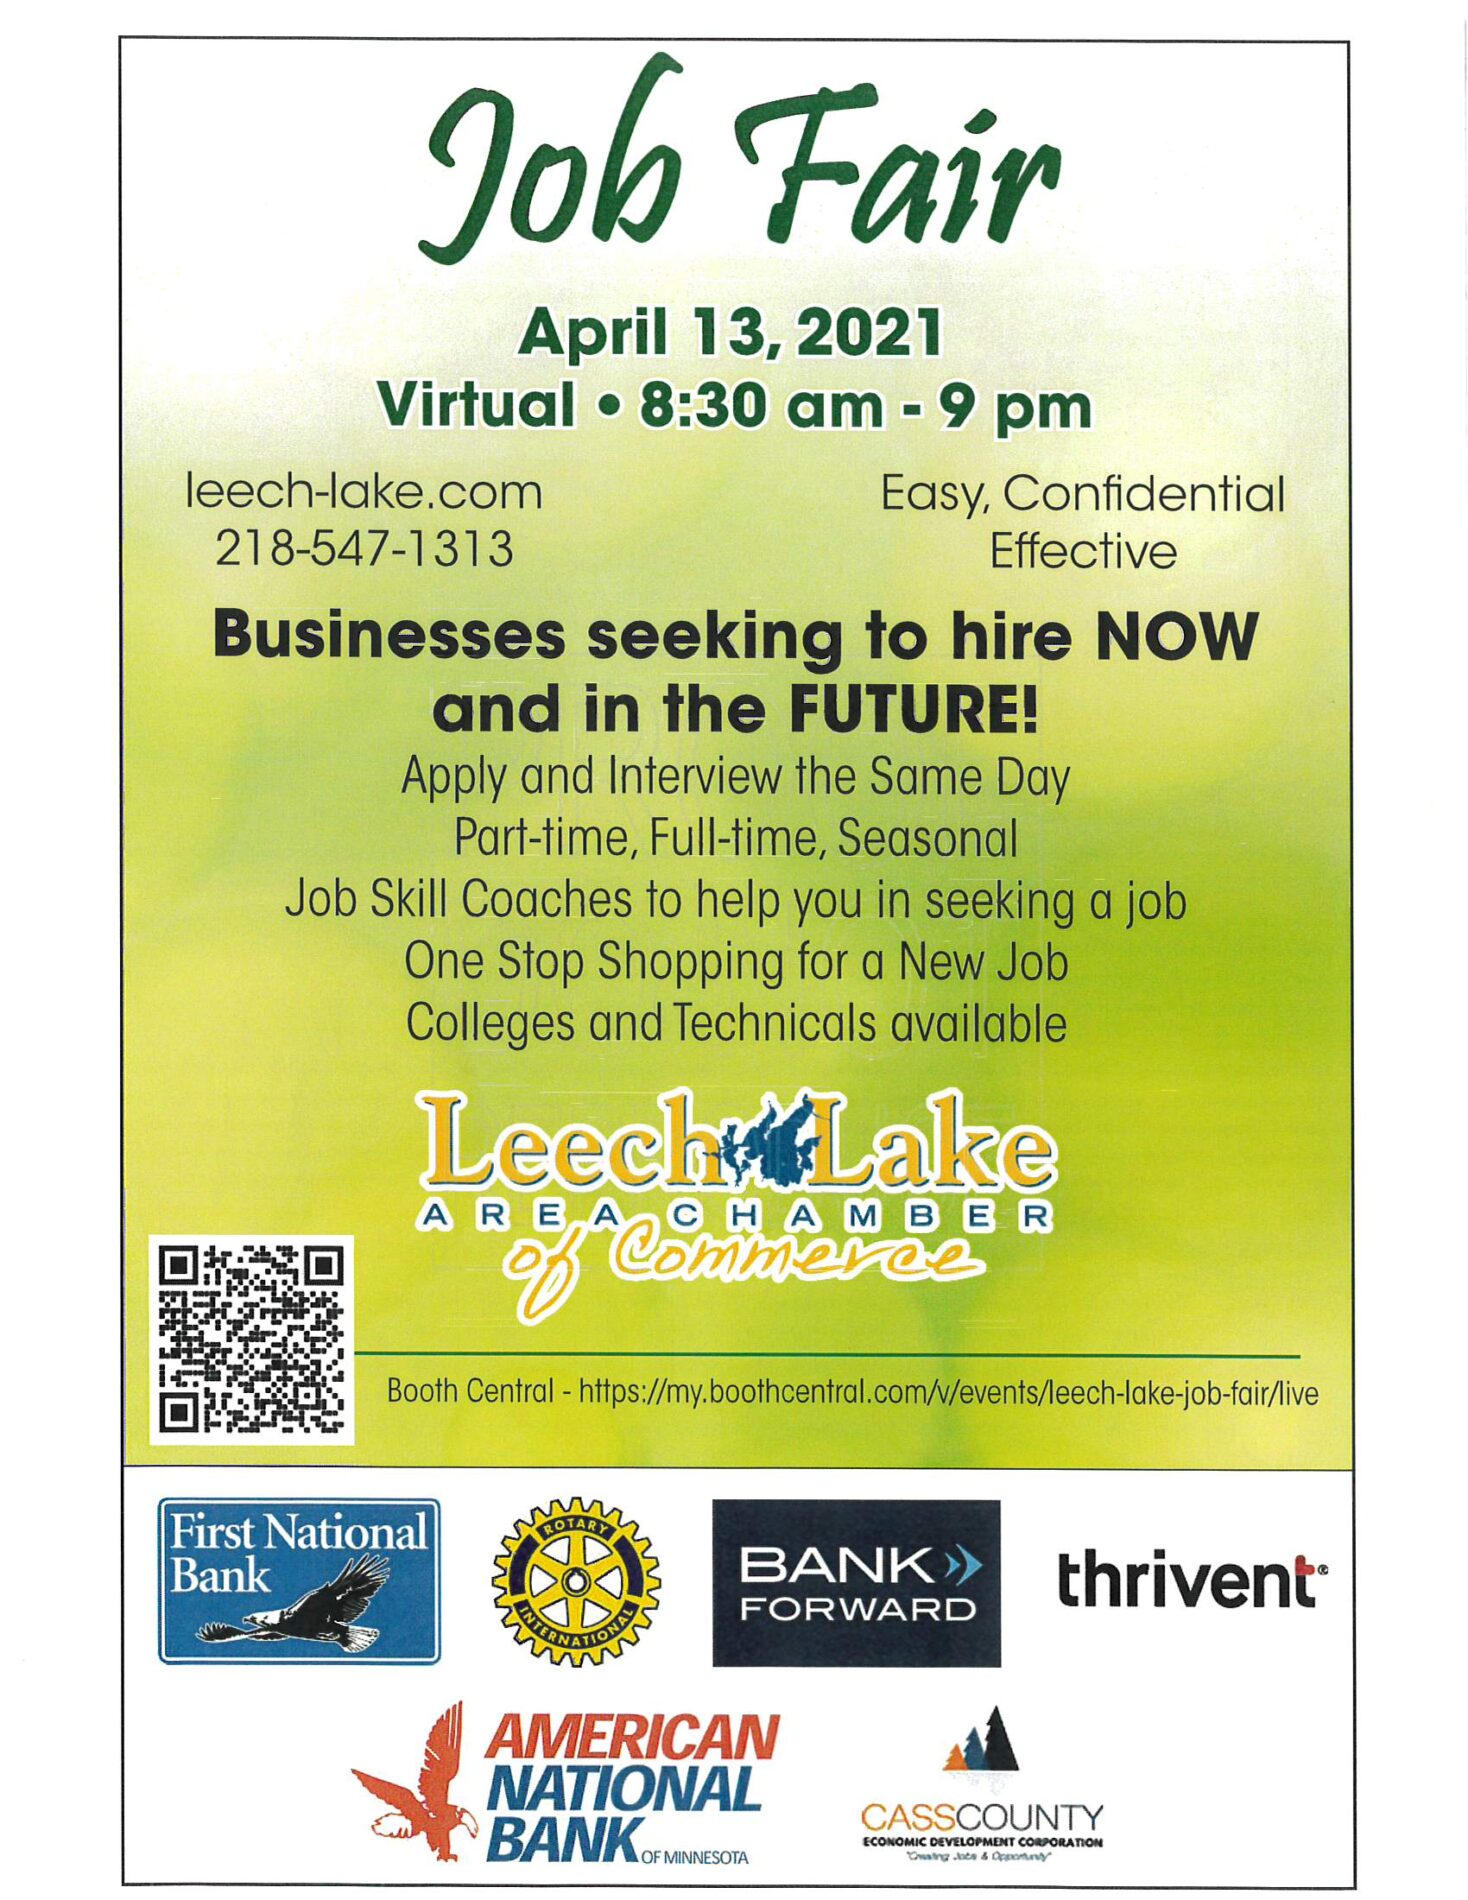 Job Fair - April 13th, 2021 from 830am-9pm Virtual. my.boothcentral.com/events/leech-lake-job-fair/live